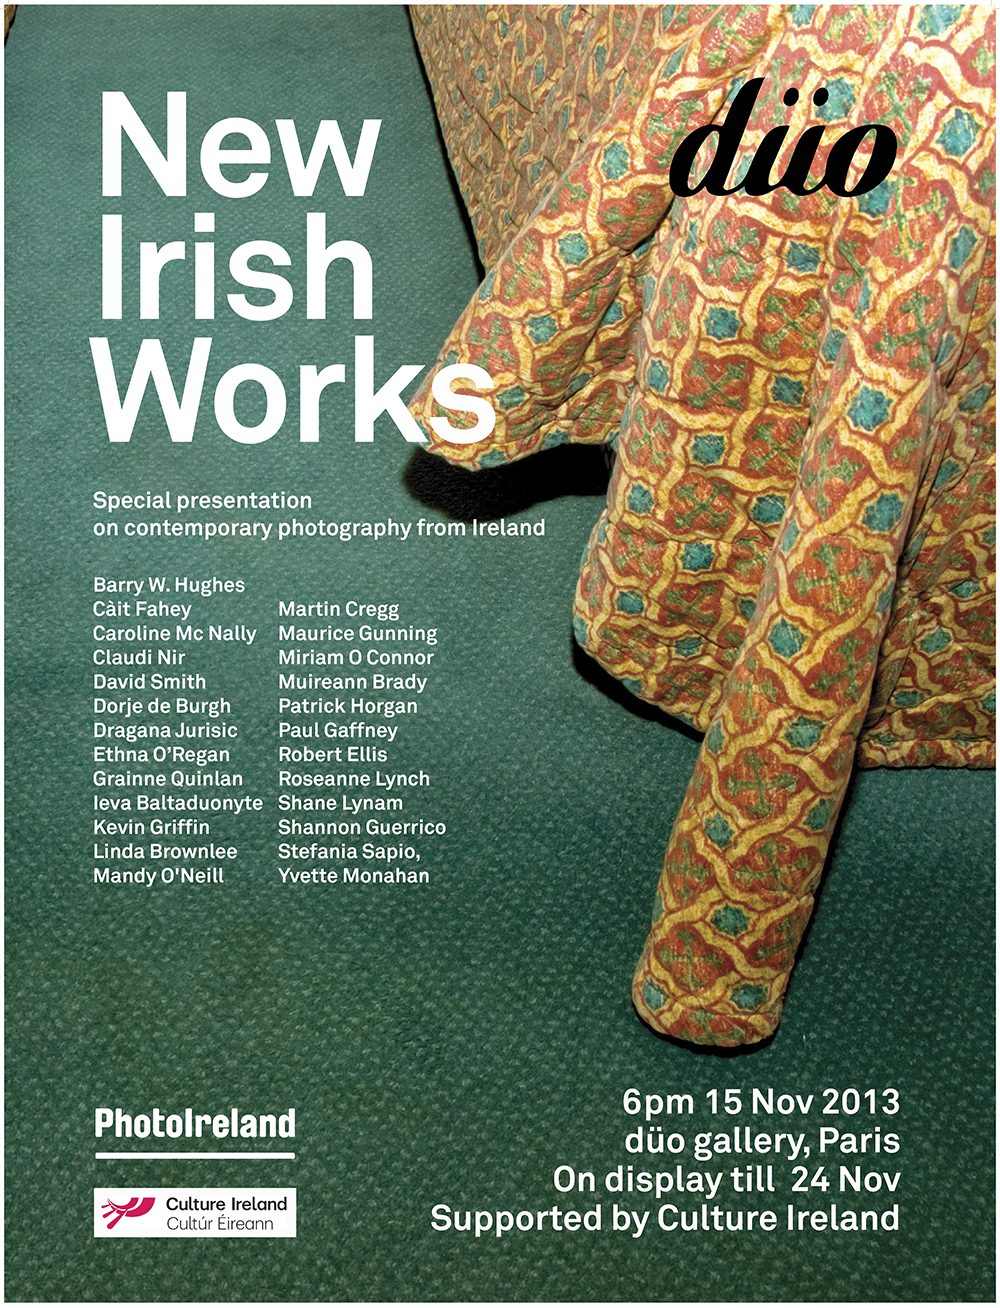 New Irish Works at düo gallery in Paris.